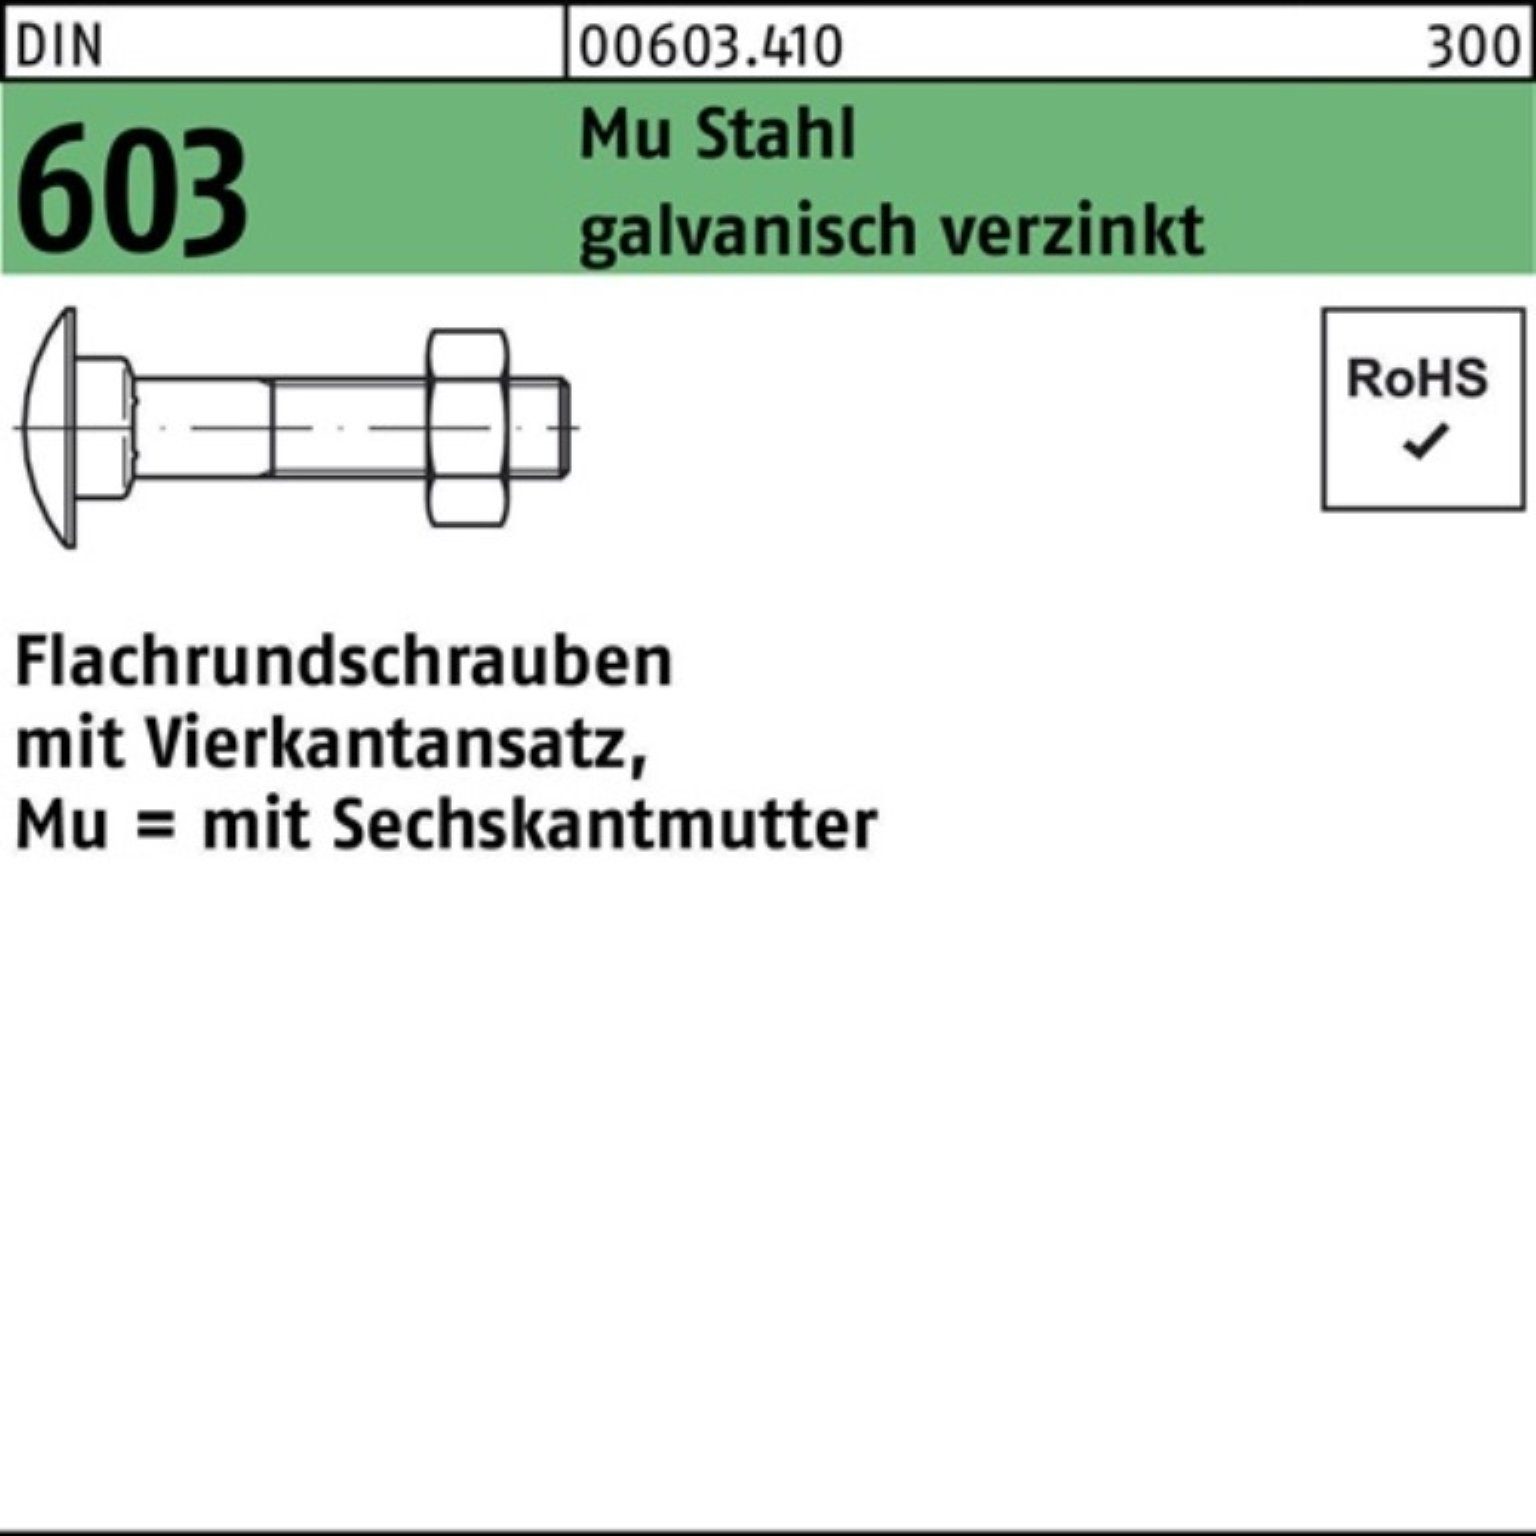 Flachrundschraube Reyher Vierkantansatz/6-ktmutter DIN Schraube M16x280 Pack 603 100er